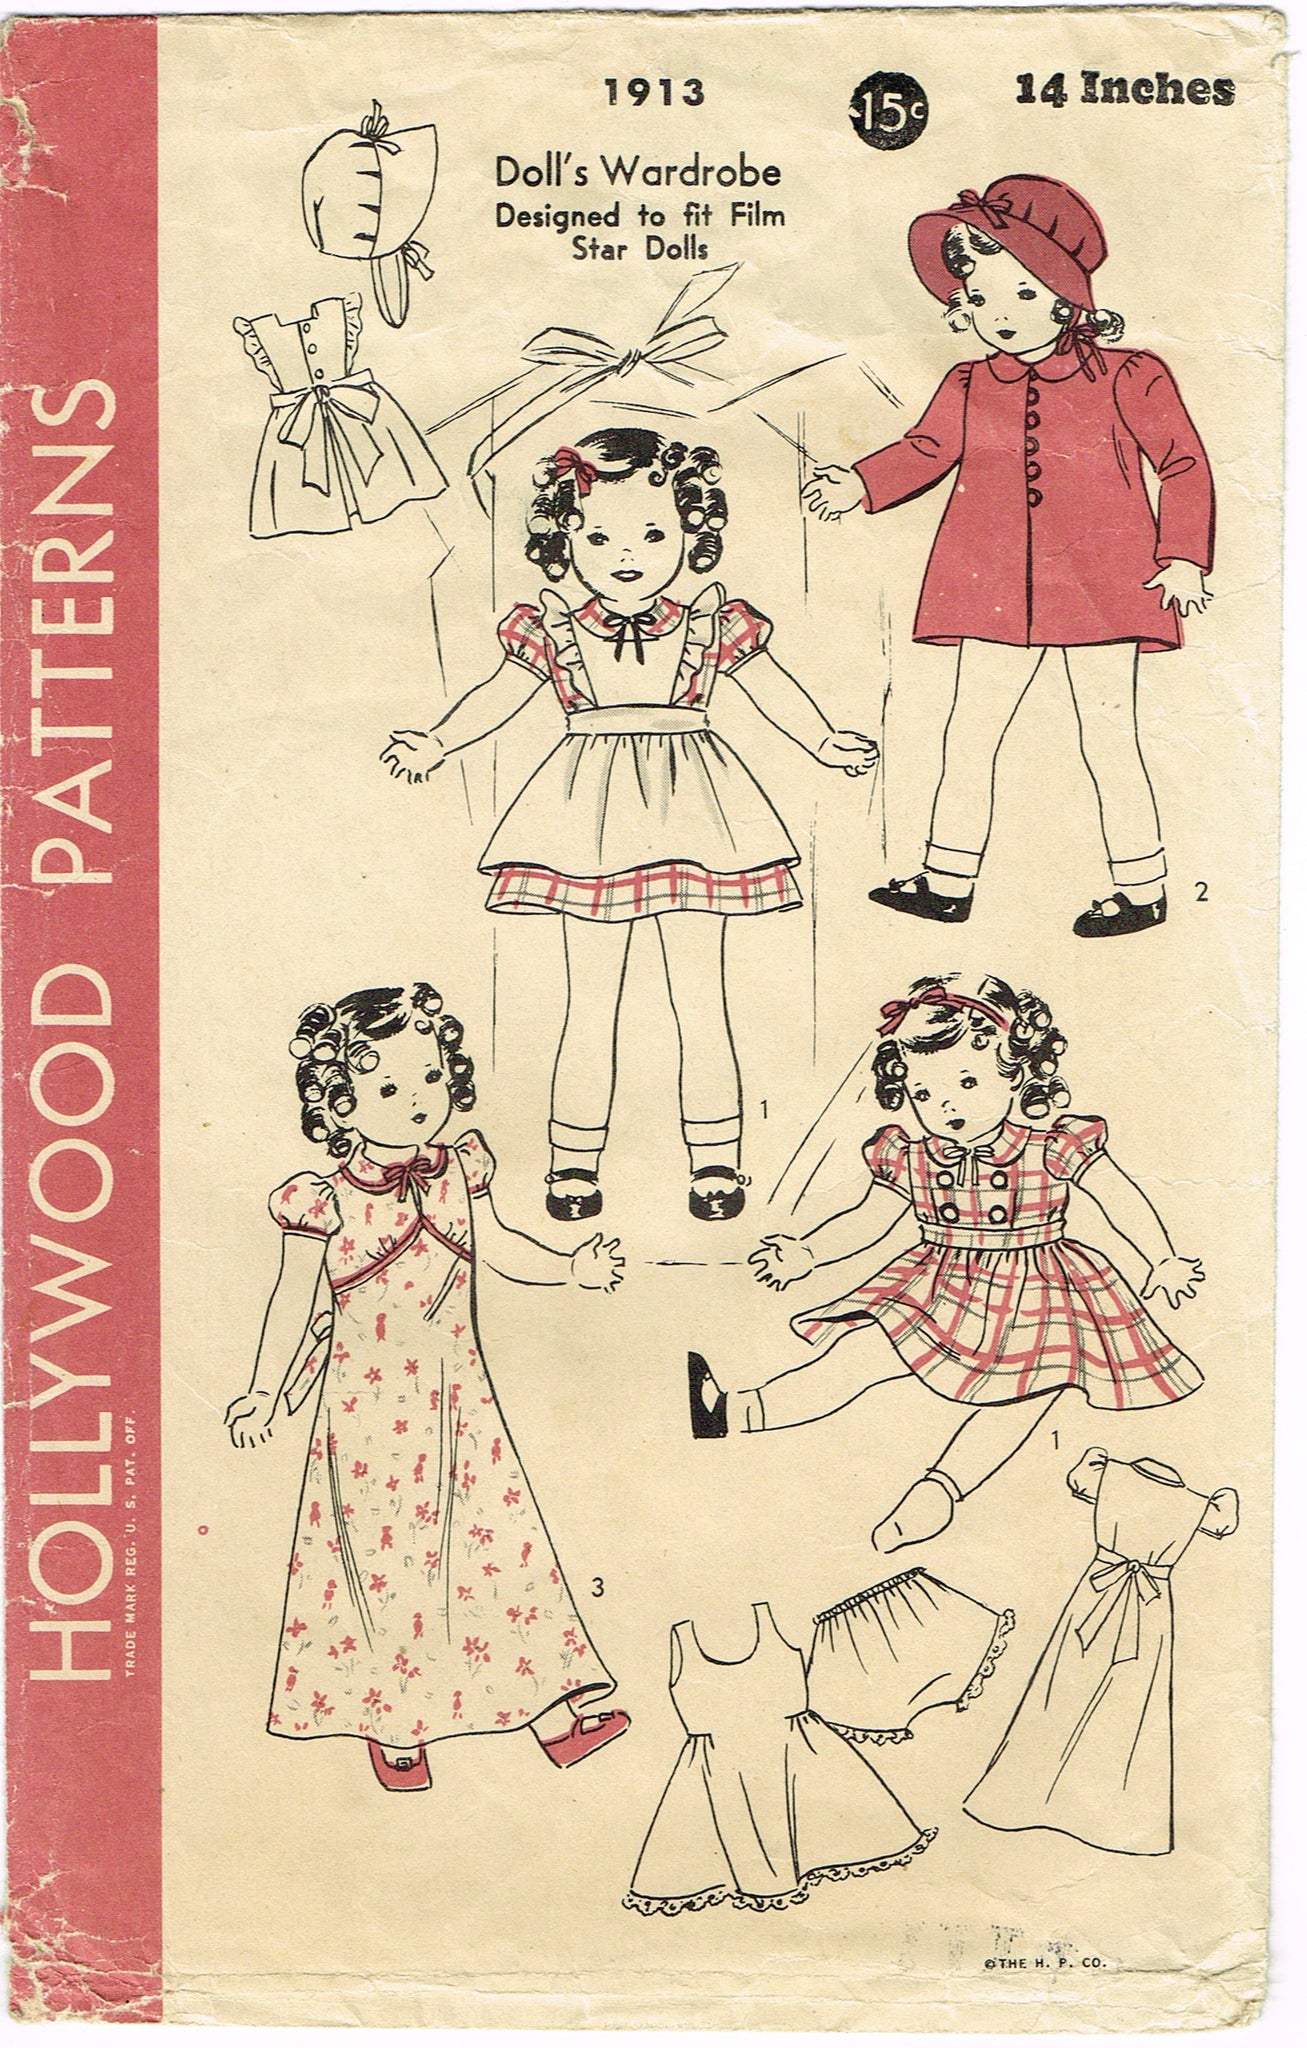 Hollywood 1921, Vintage Sewing Patterns